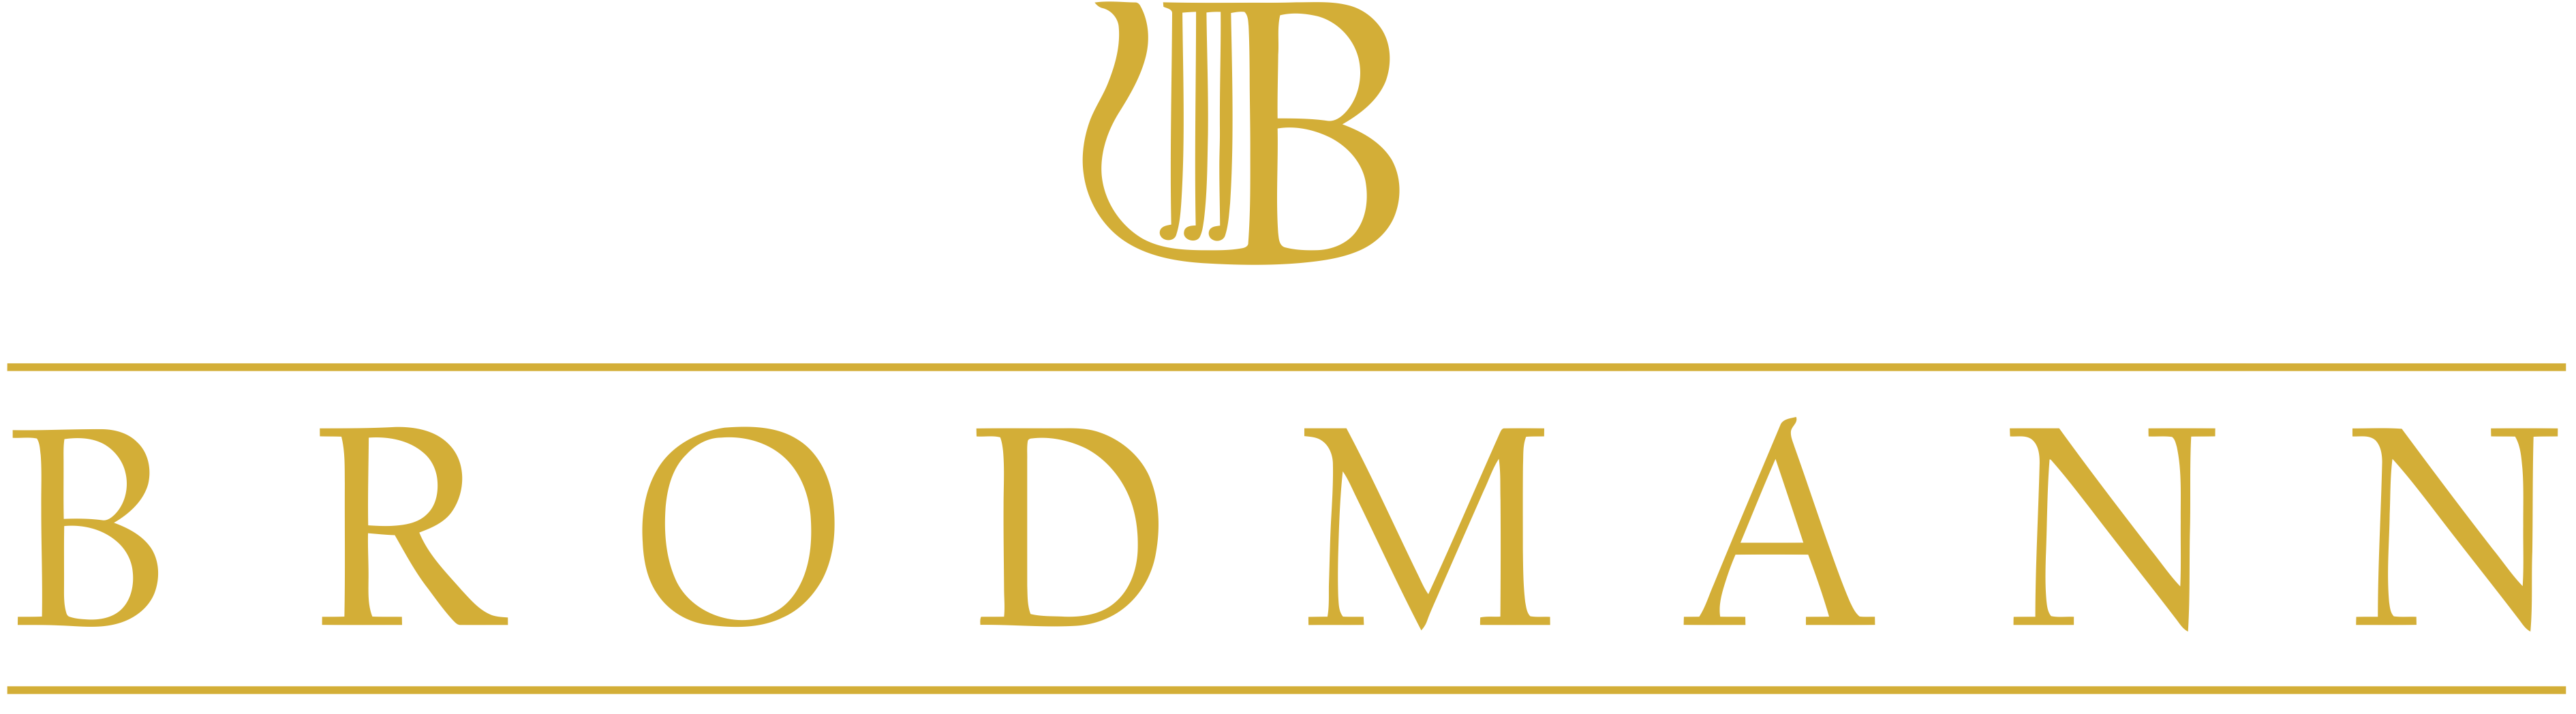 Brodmann logo